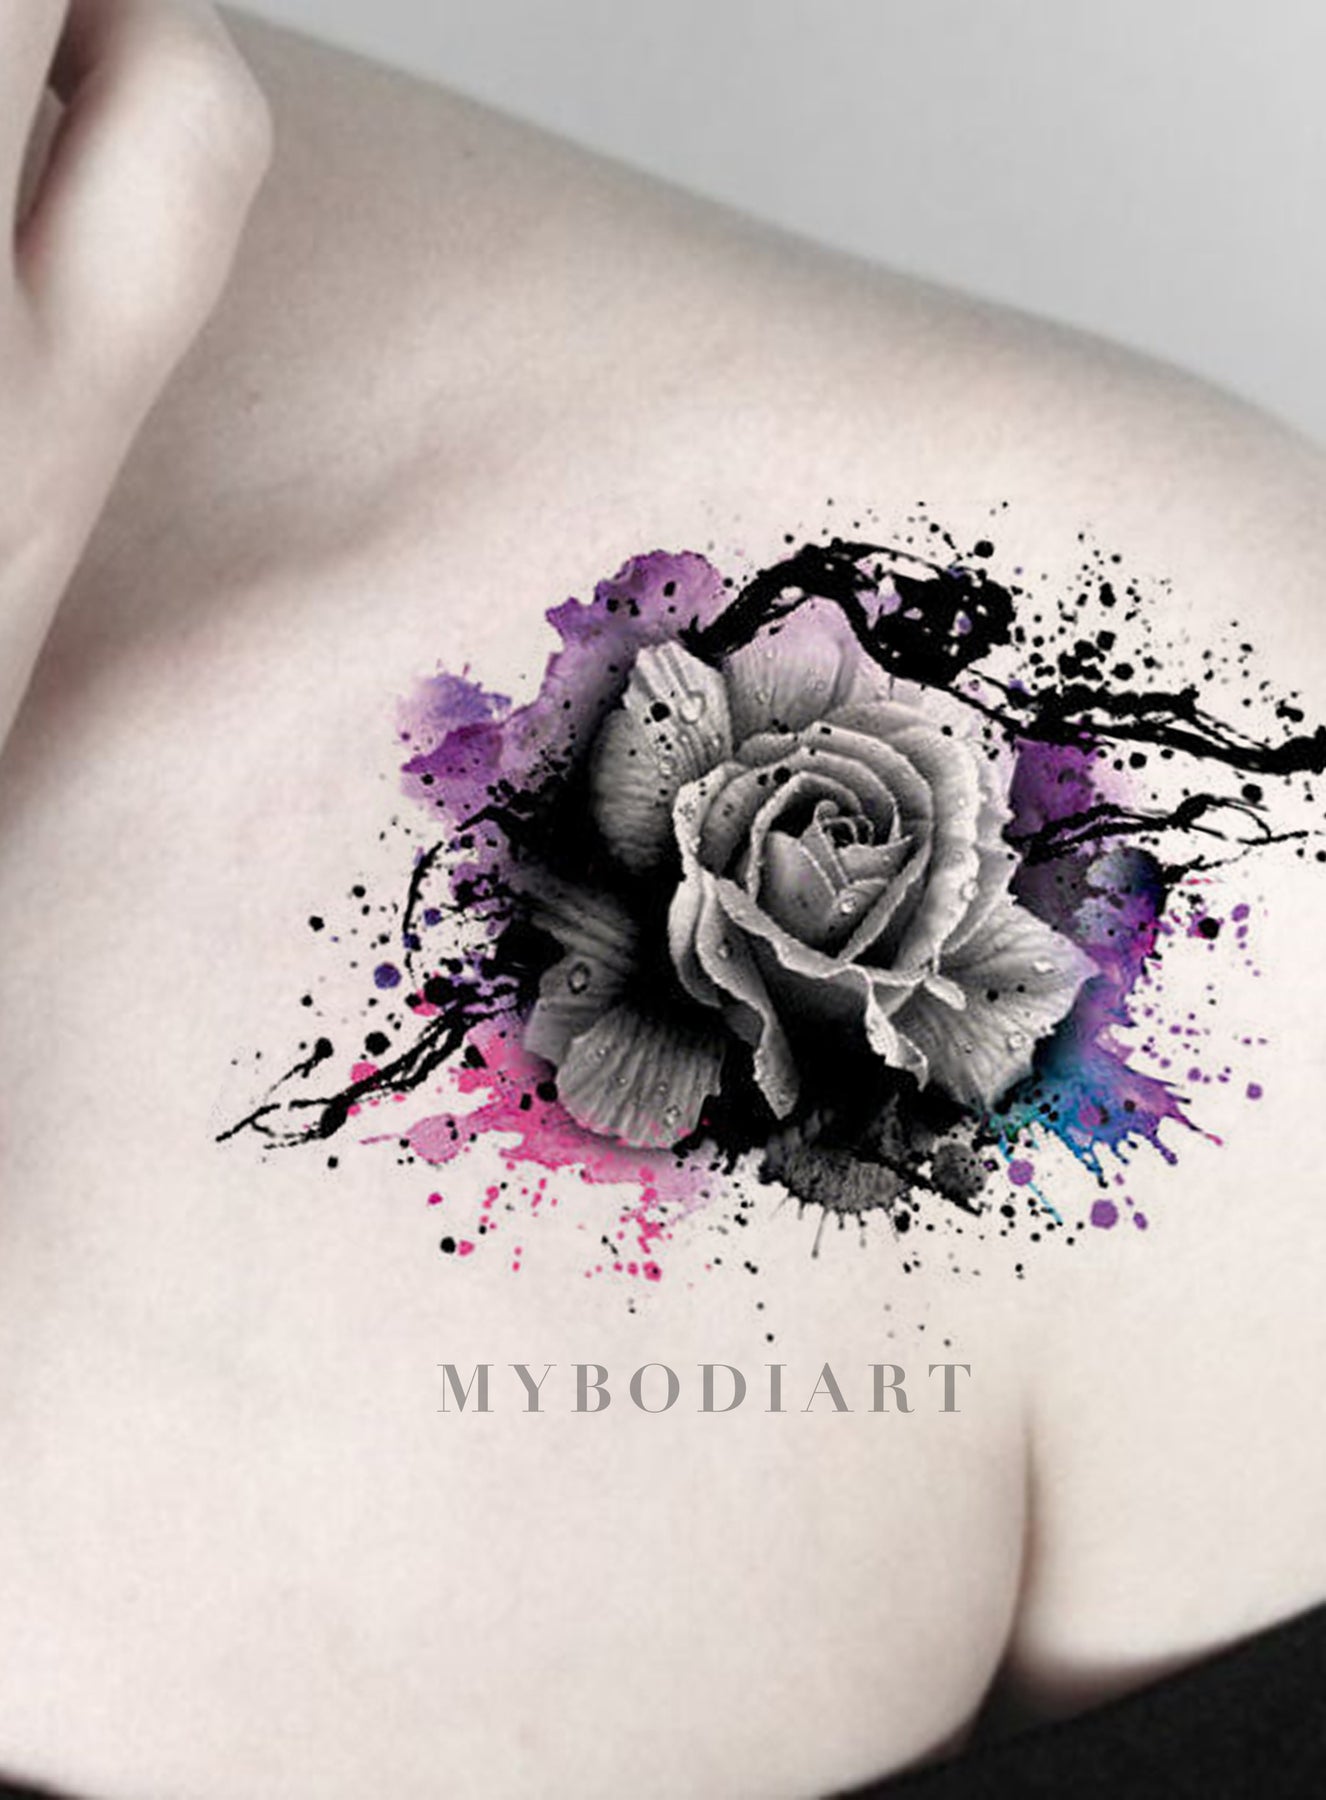 Blood soaked black rose tattoo by greatthepat on DeviantArt